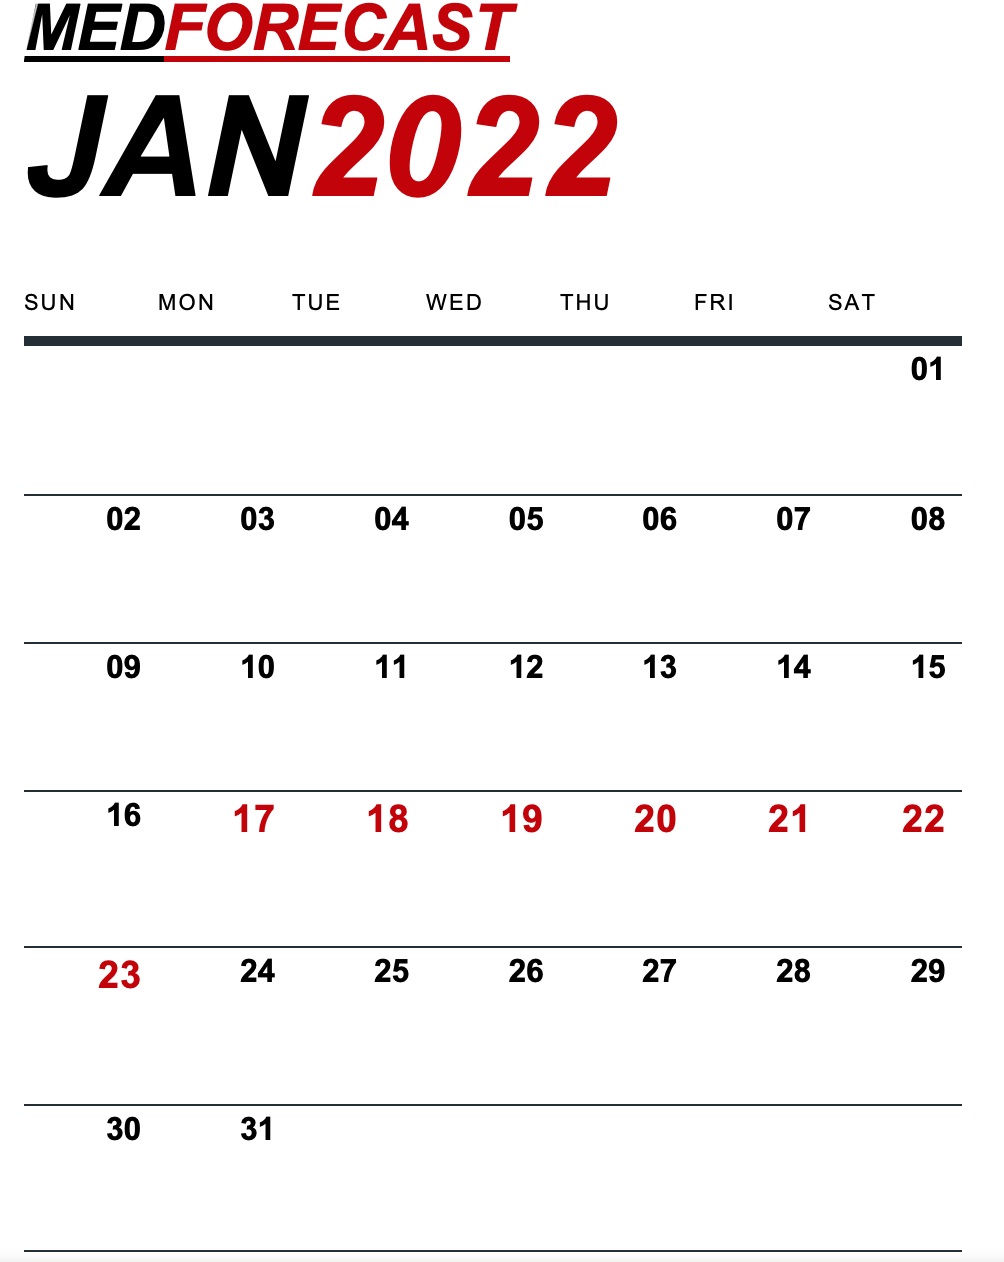 Medical News Forecast for January 17-23